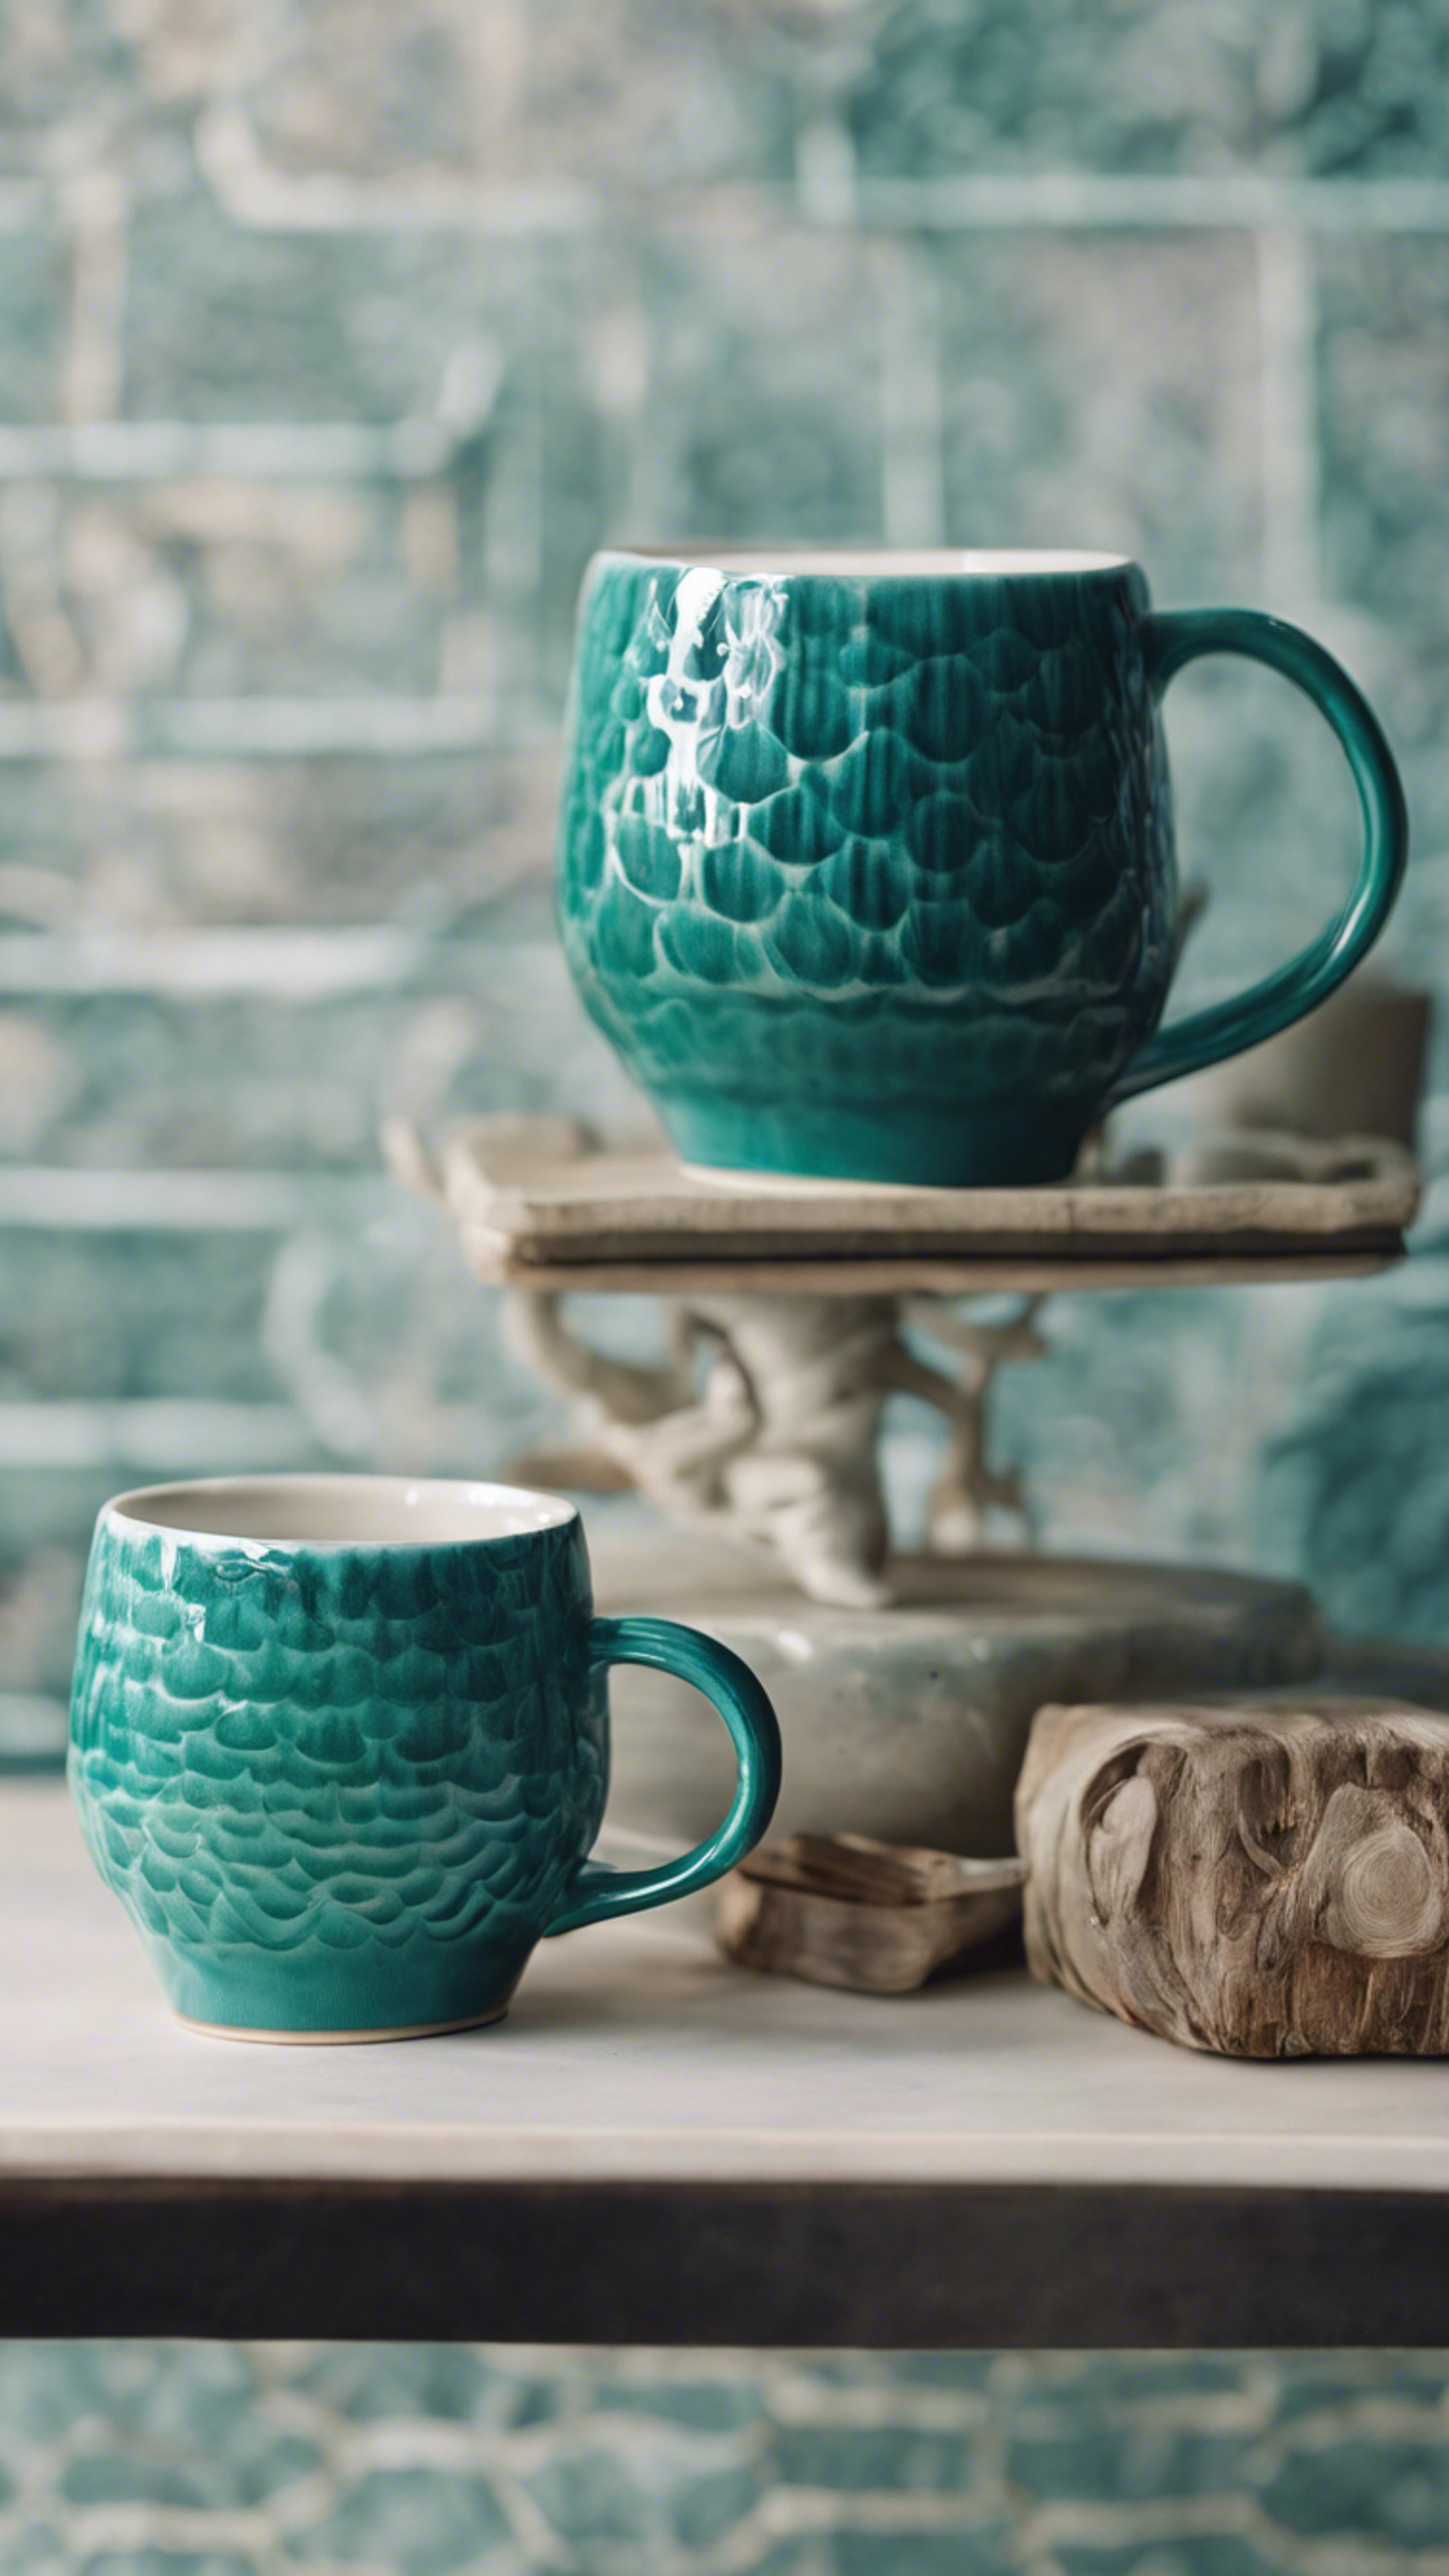 A scallop patterned ceramic mug with a cool teal glaze.壁紙[4f34e12456f849958891]